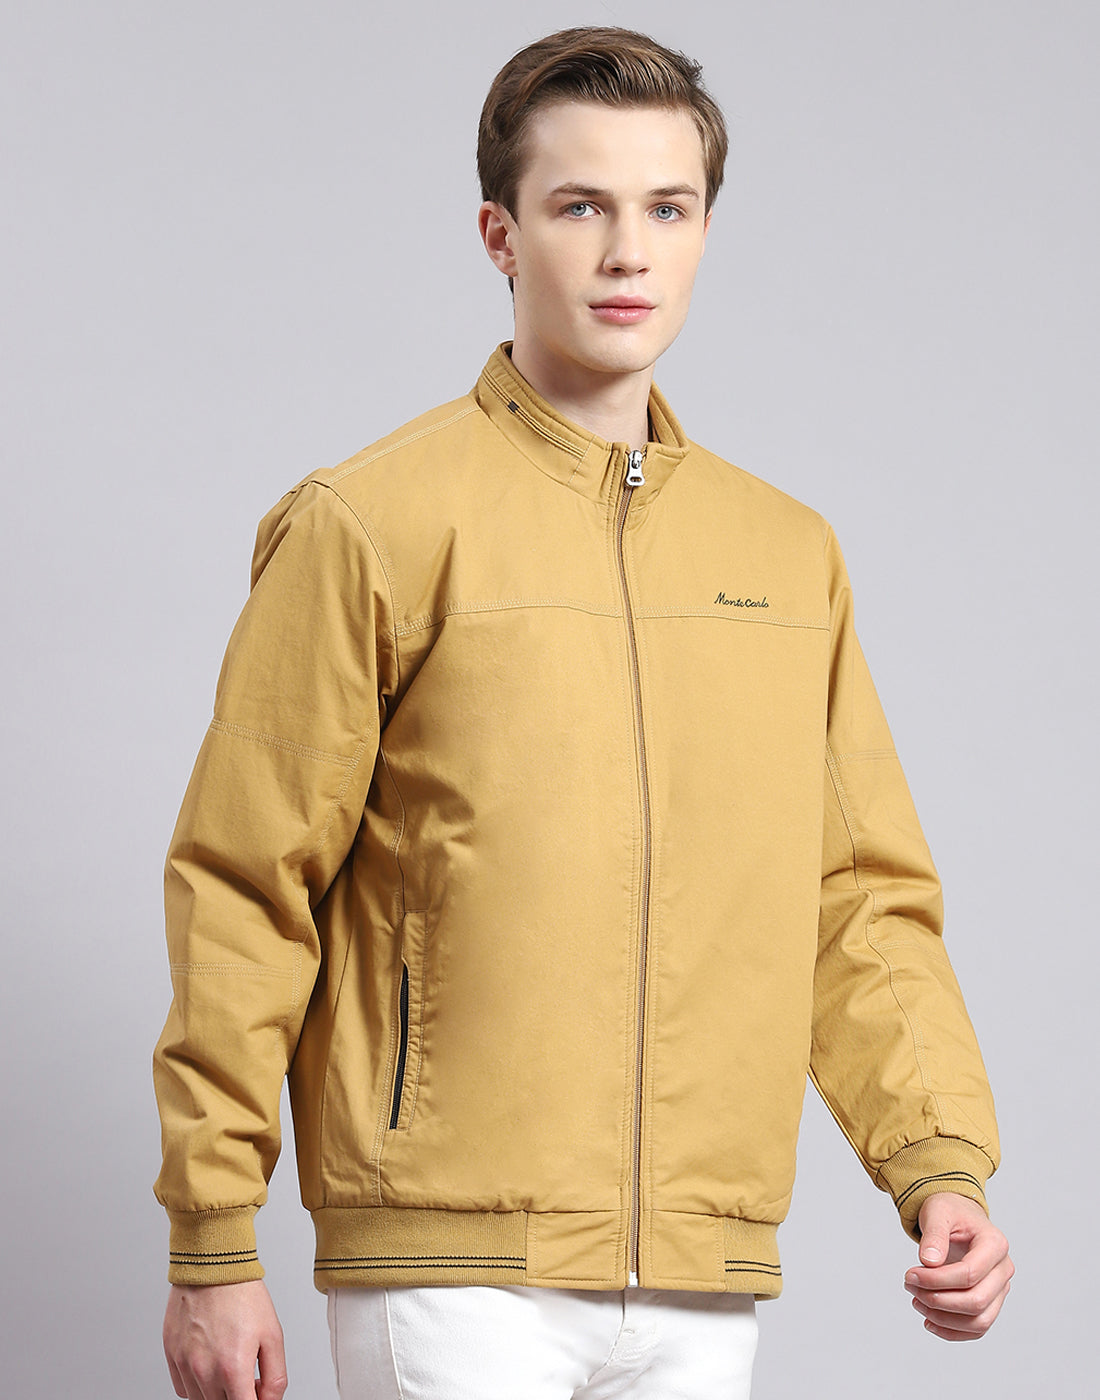 Men Mustard Solid Stand Collar Full Sleeve Jacket